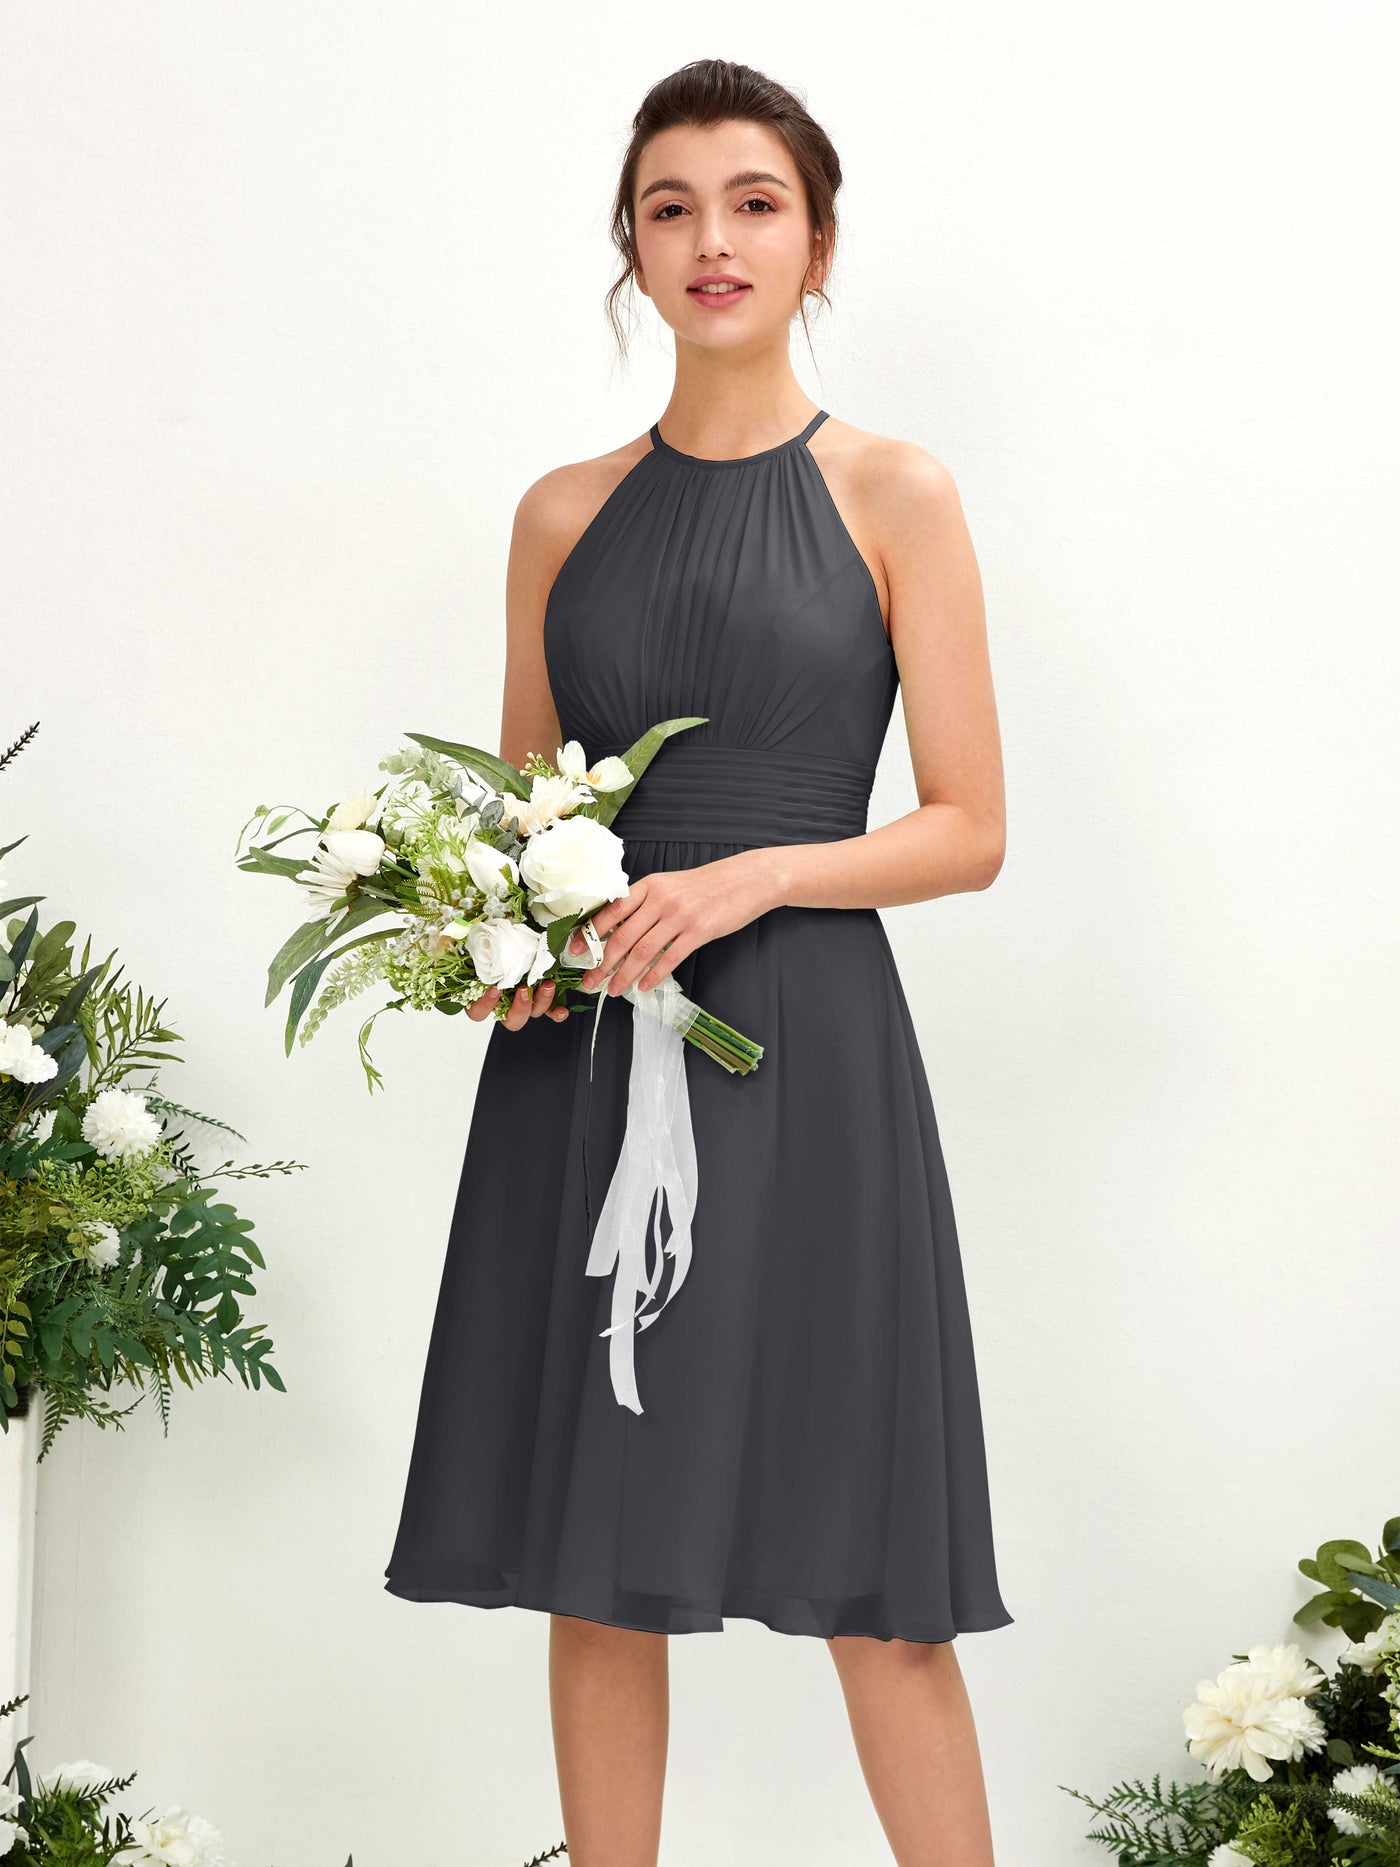 Pewter Bridesmaid Dresses Bridesmaid Dress A-line Chiffon Halter Knee Length Sleeveless Wedding Party Dress (81220138)#color_pewter